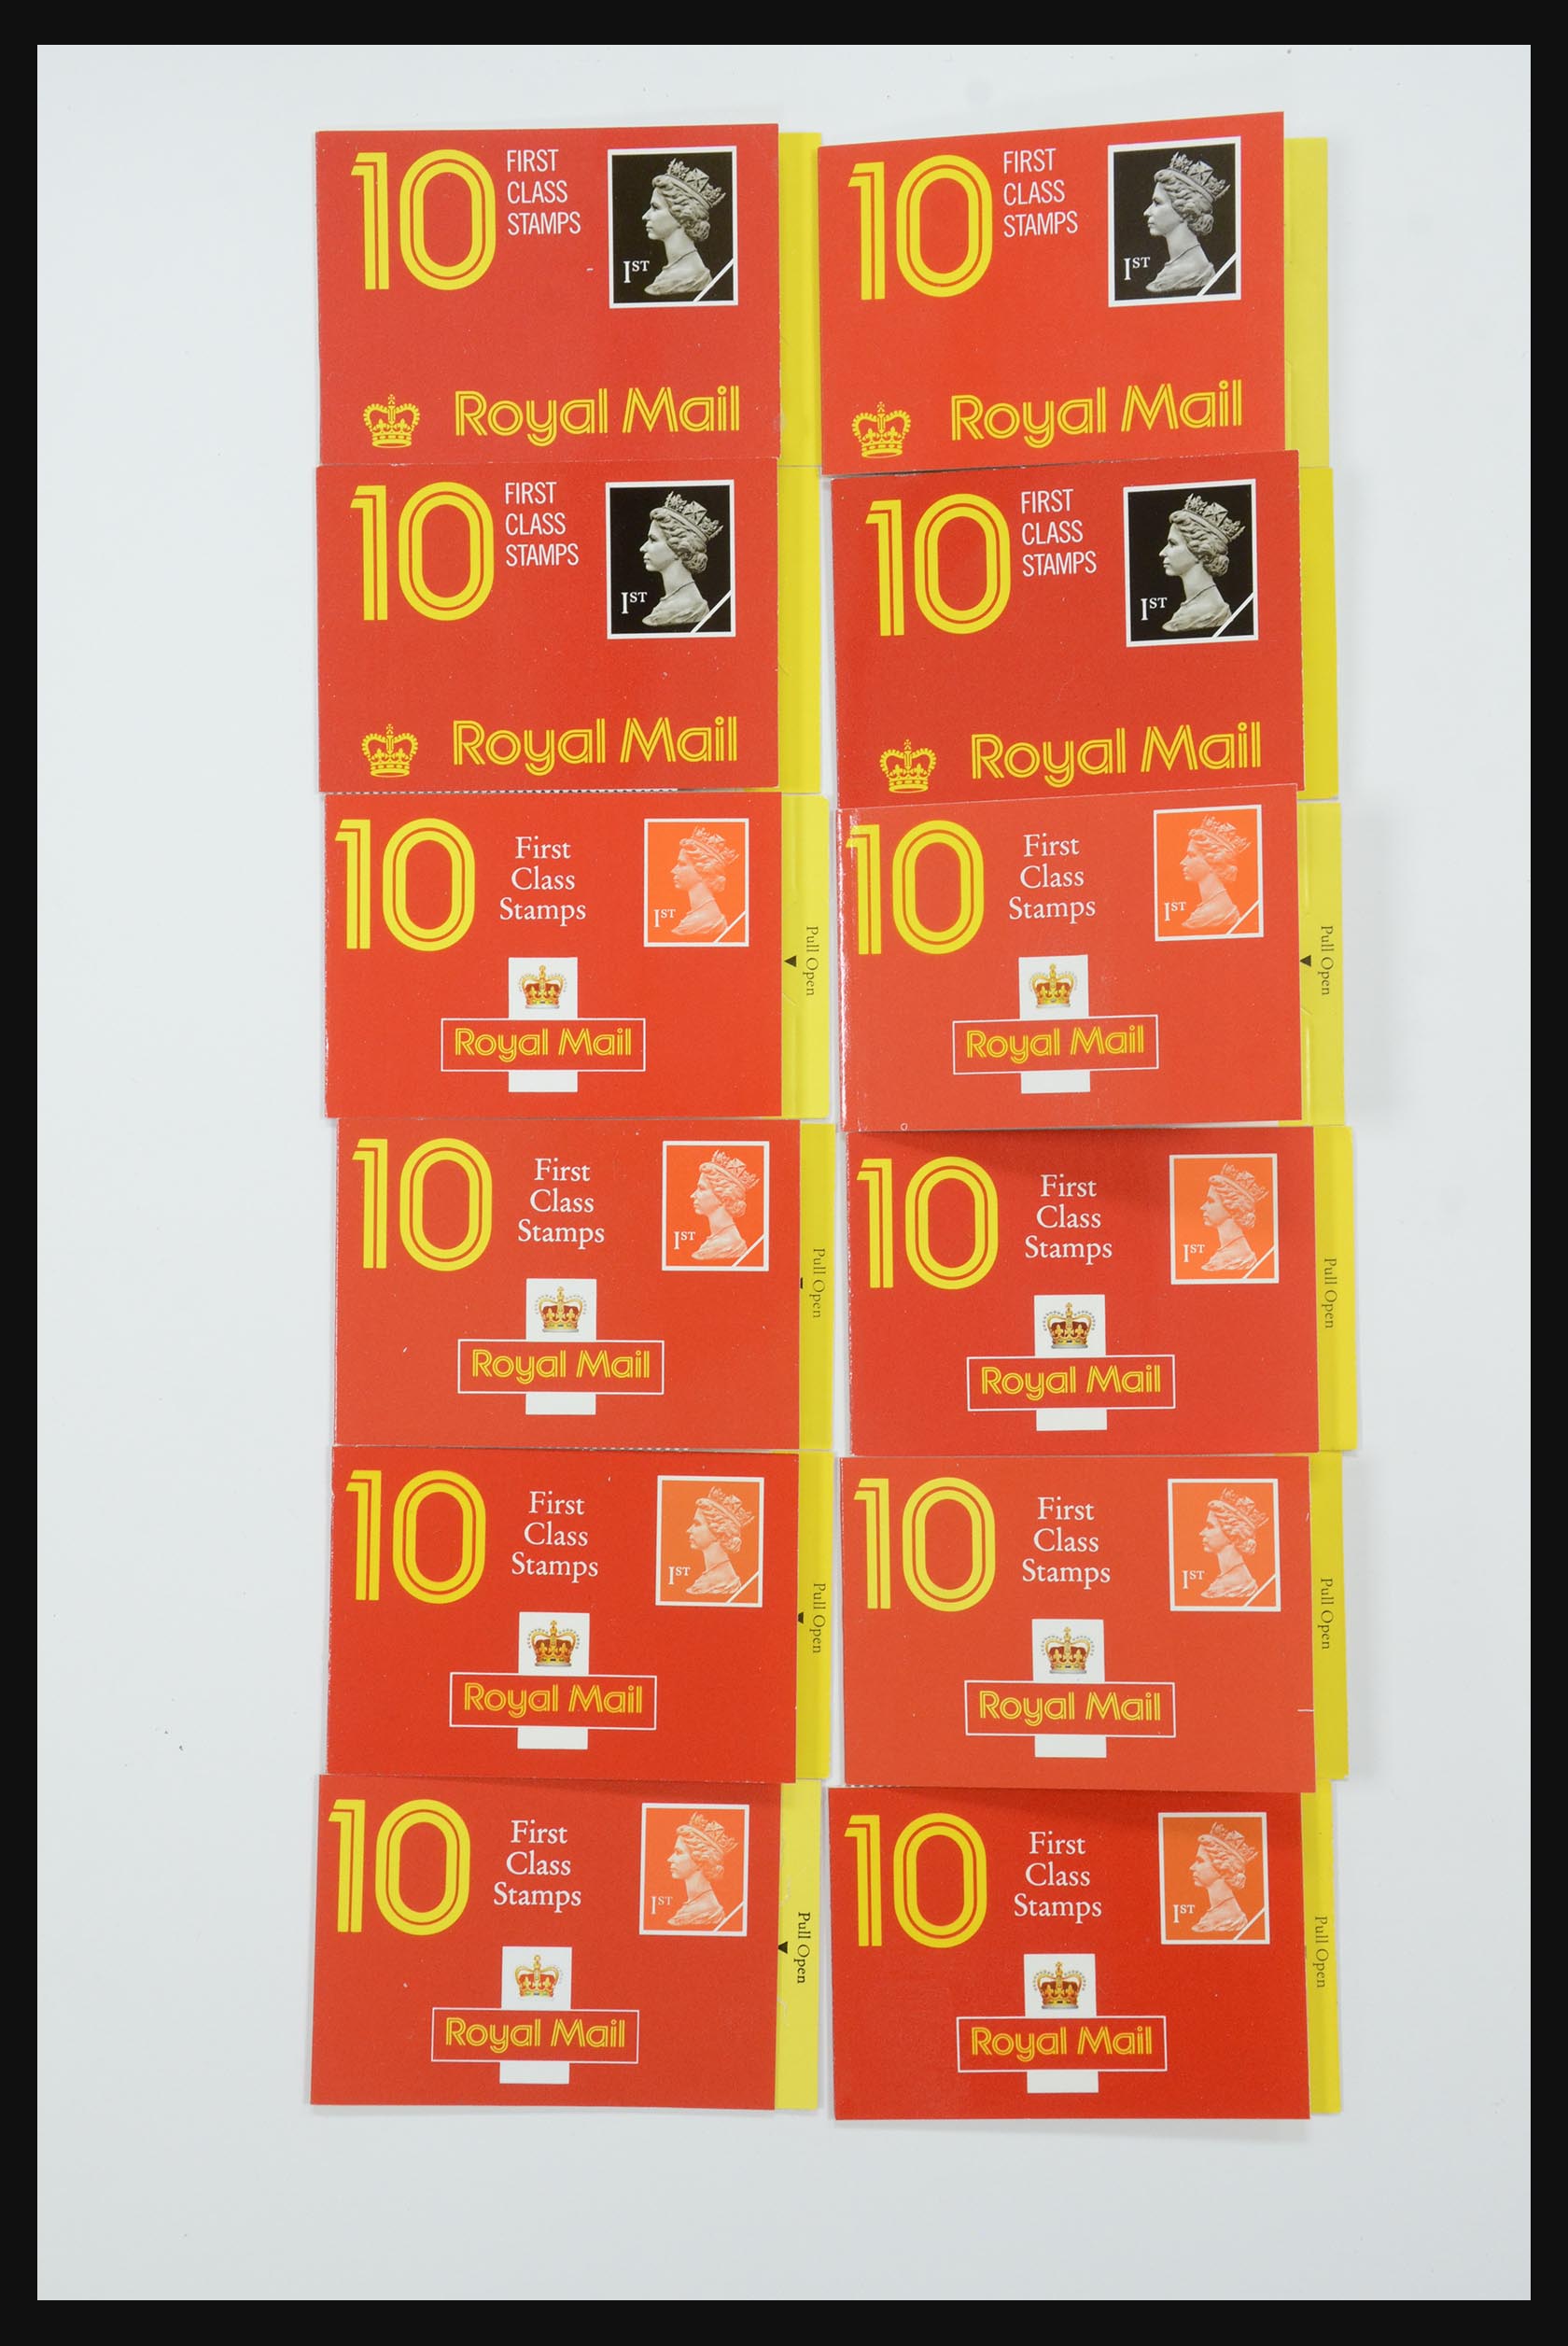 31961 033 - 31961 Great Britain stampbooklets 1971-1999.